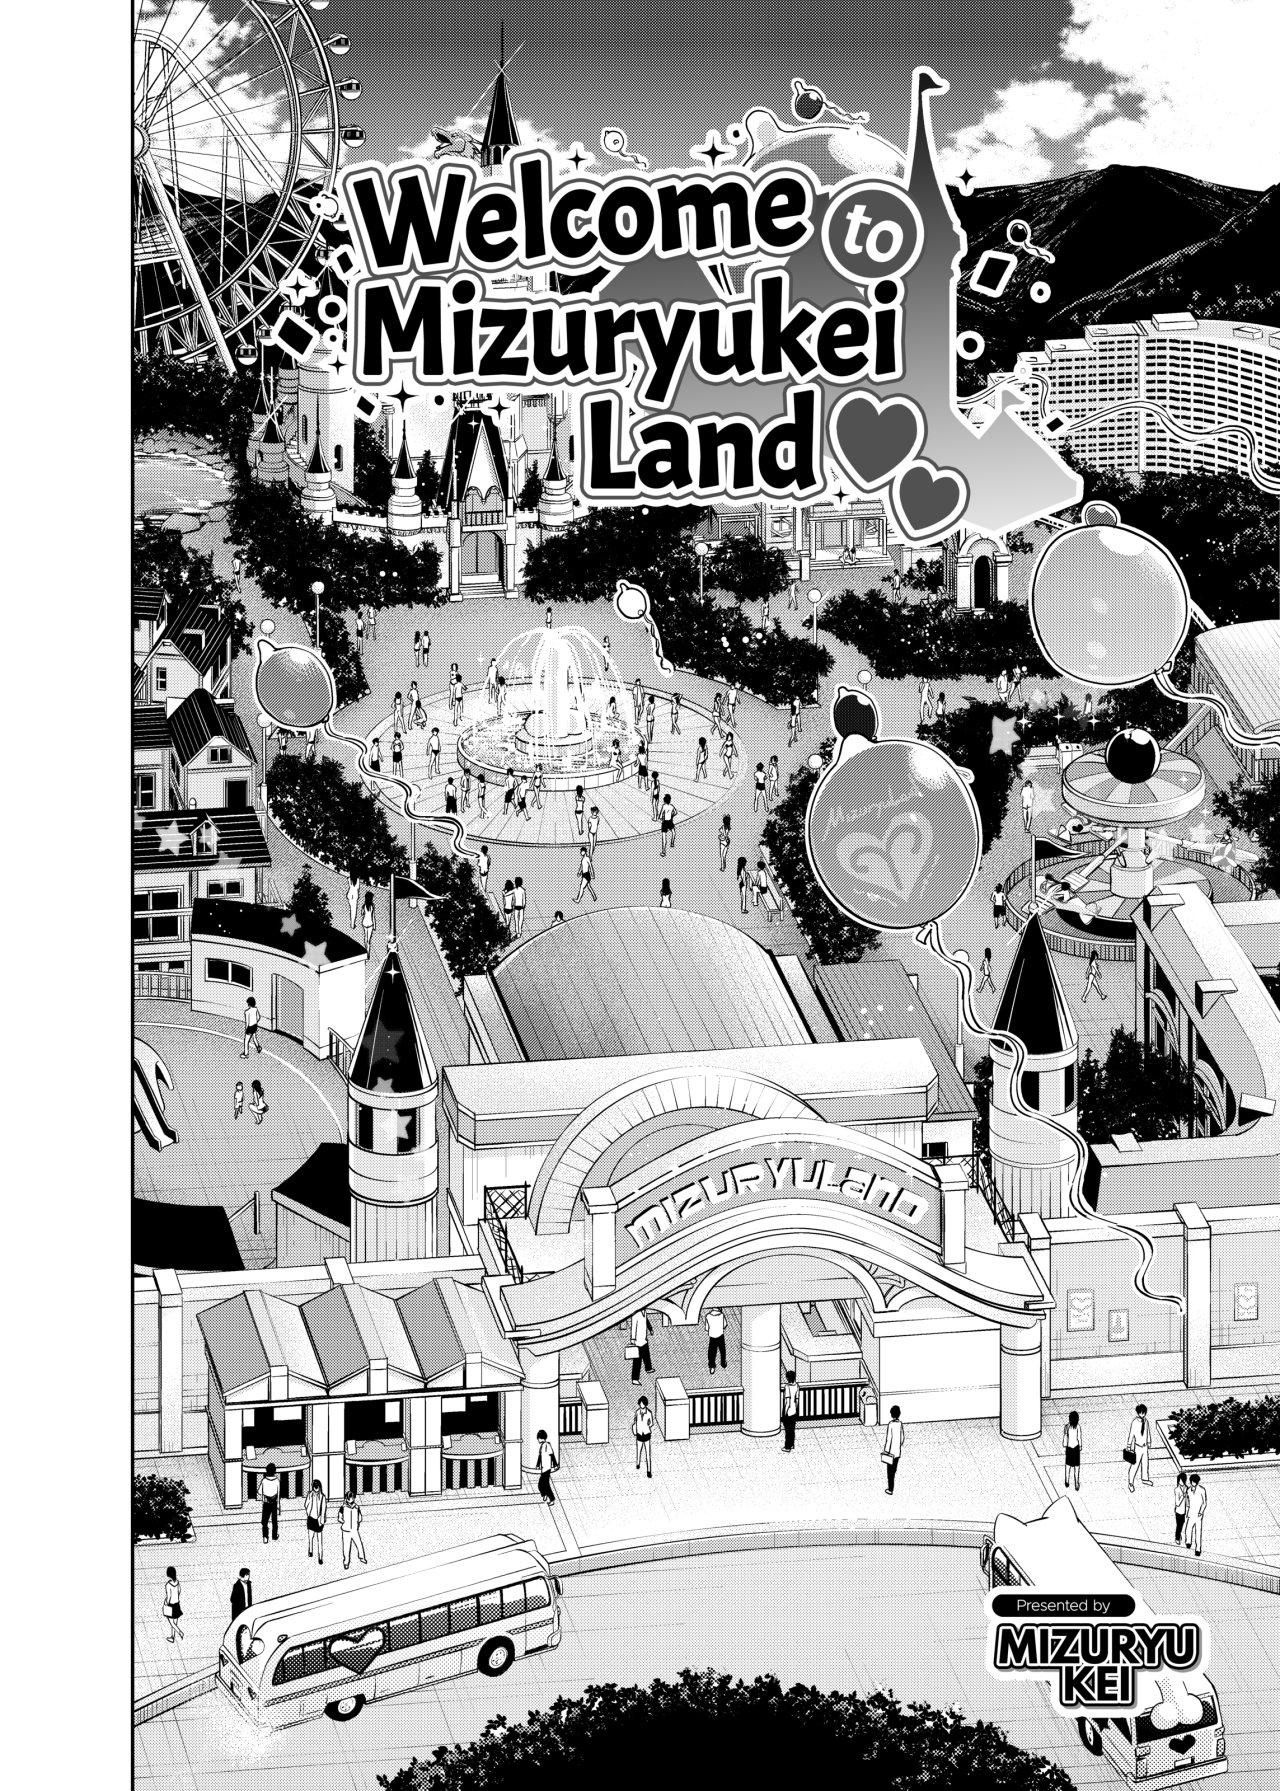 Welcome to Mizuryukei Land - Day 1 5 - 3